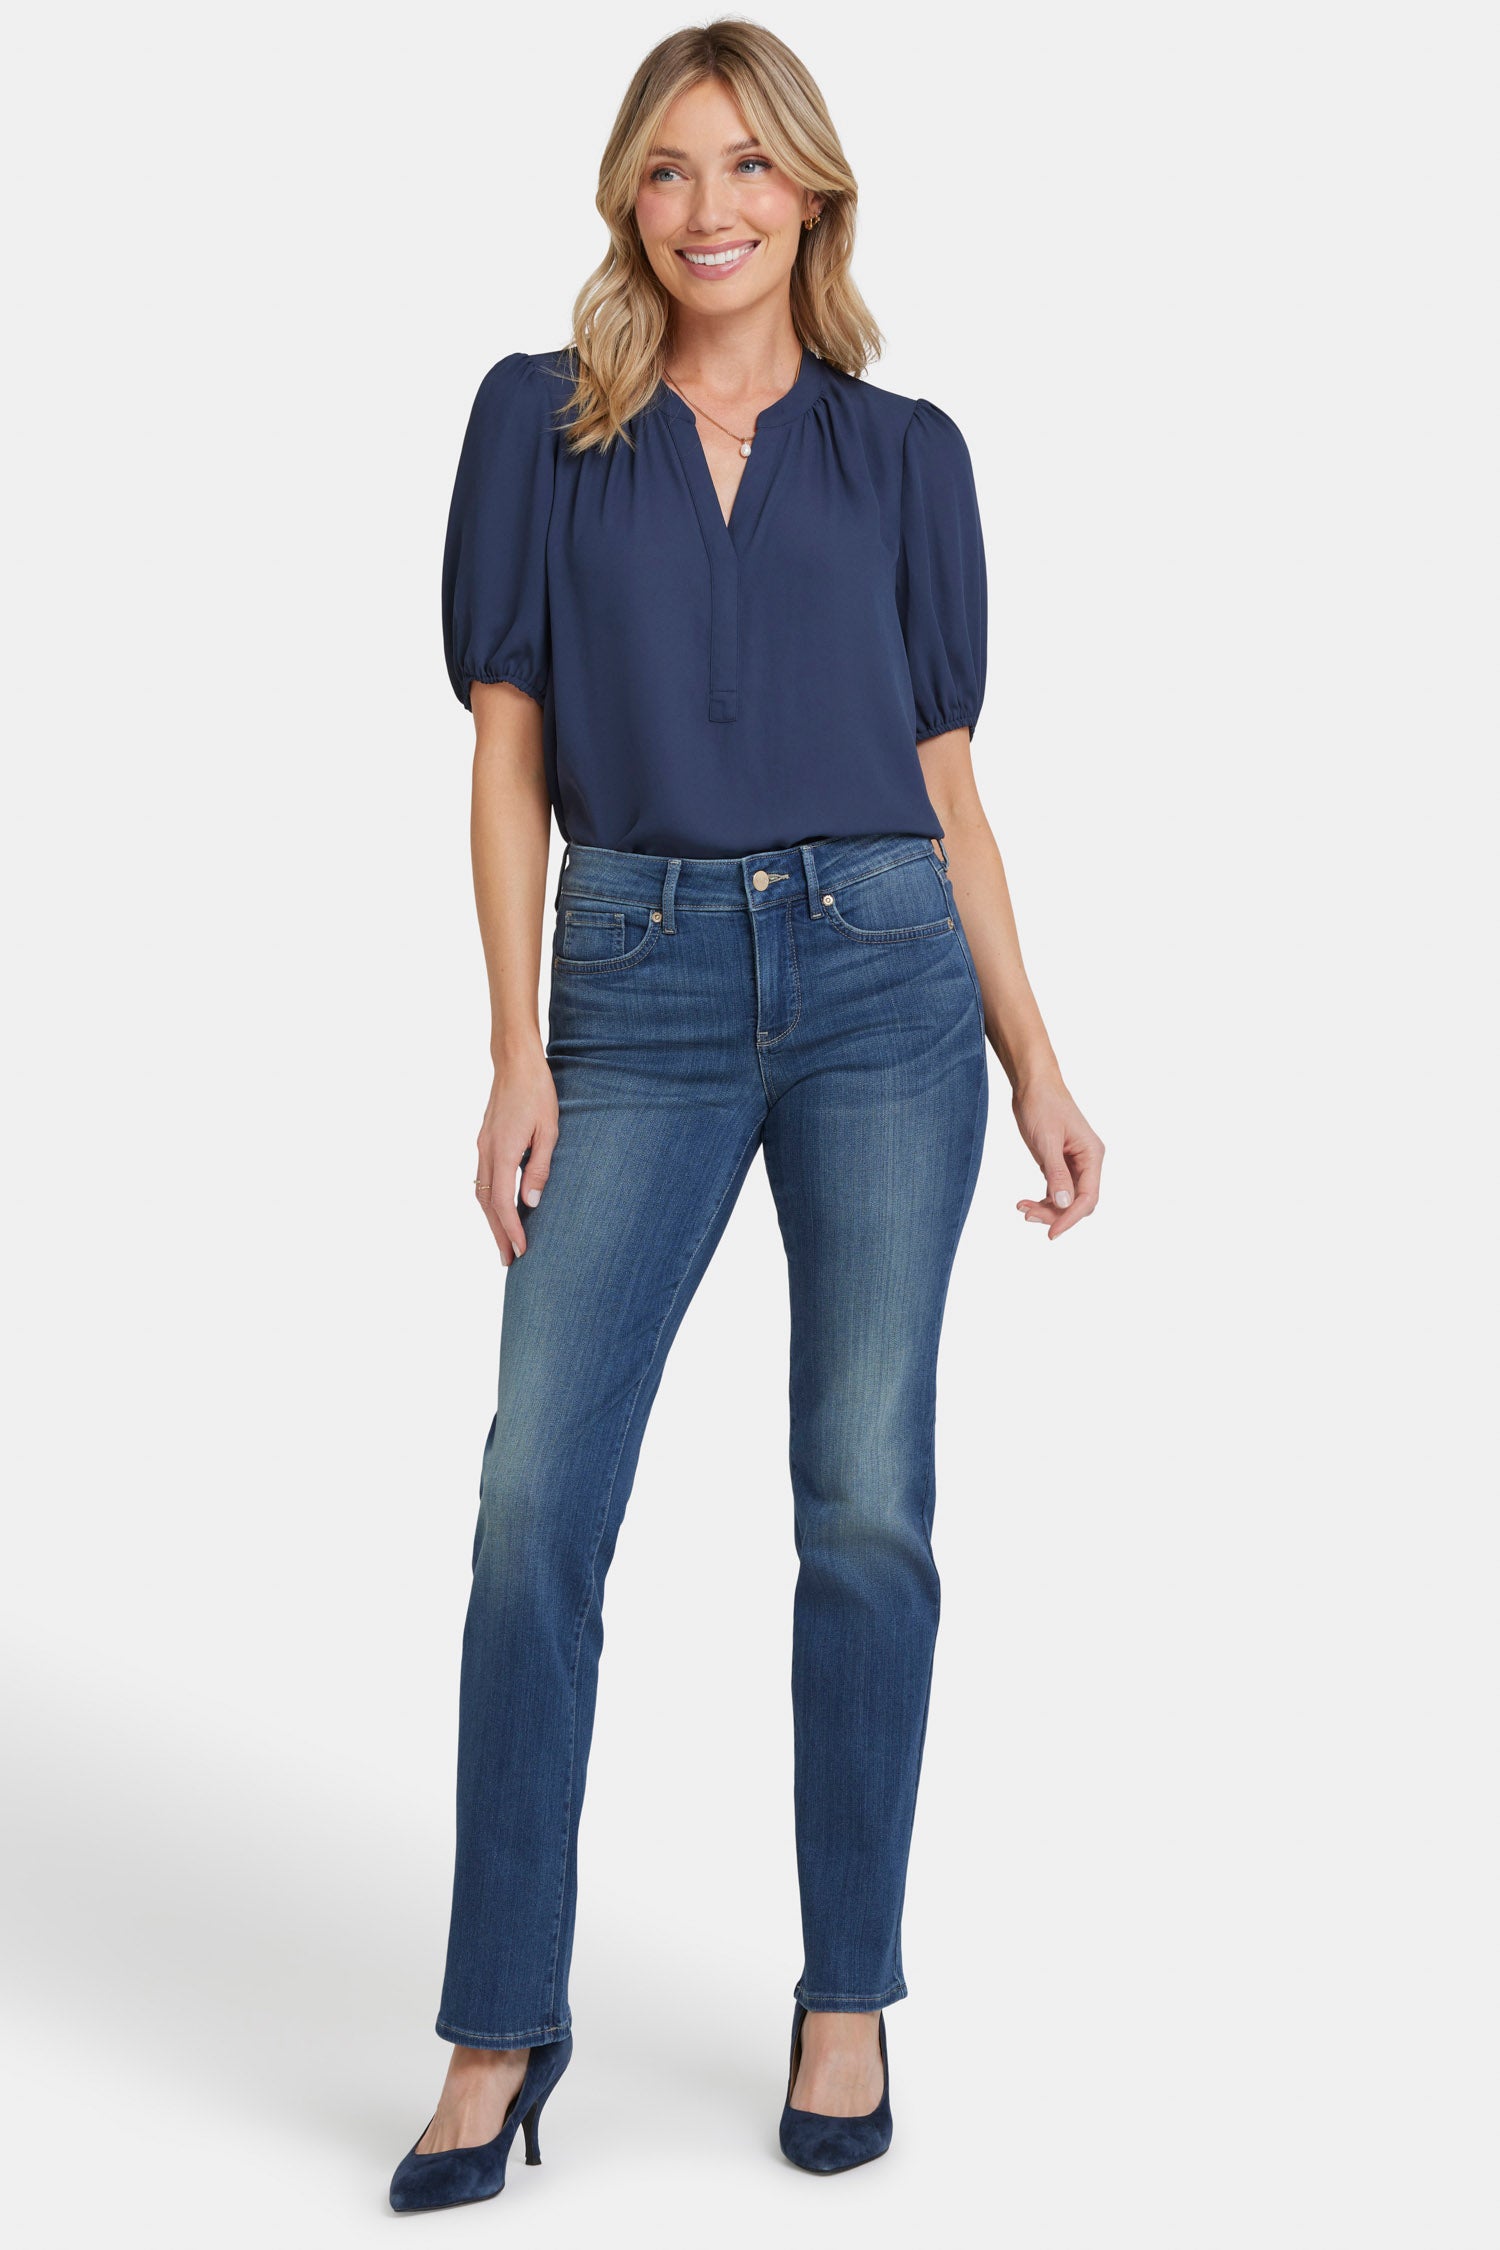 Sure Stretch® Jeans Collection - Soft Stretchy Denim | NYDJ Apparel